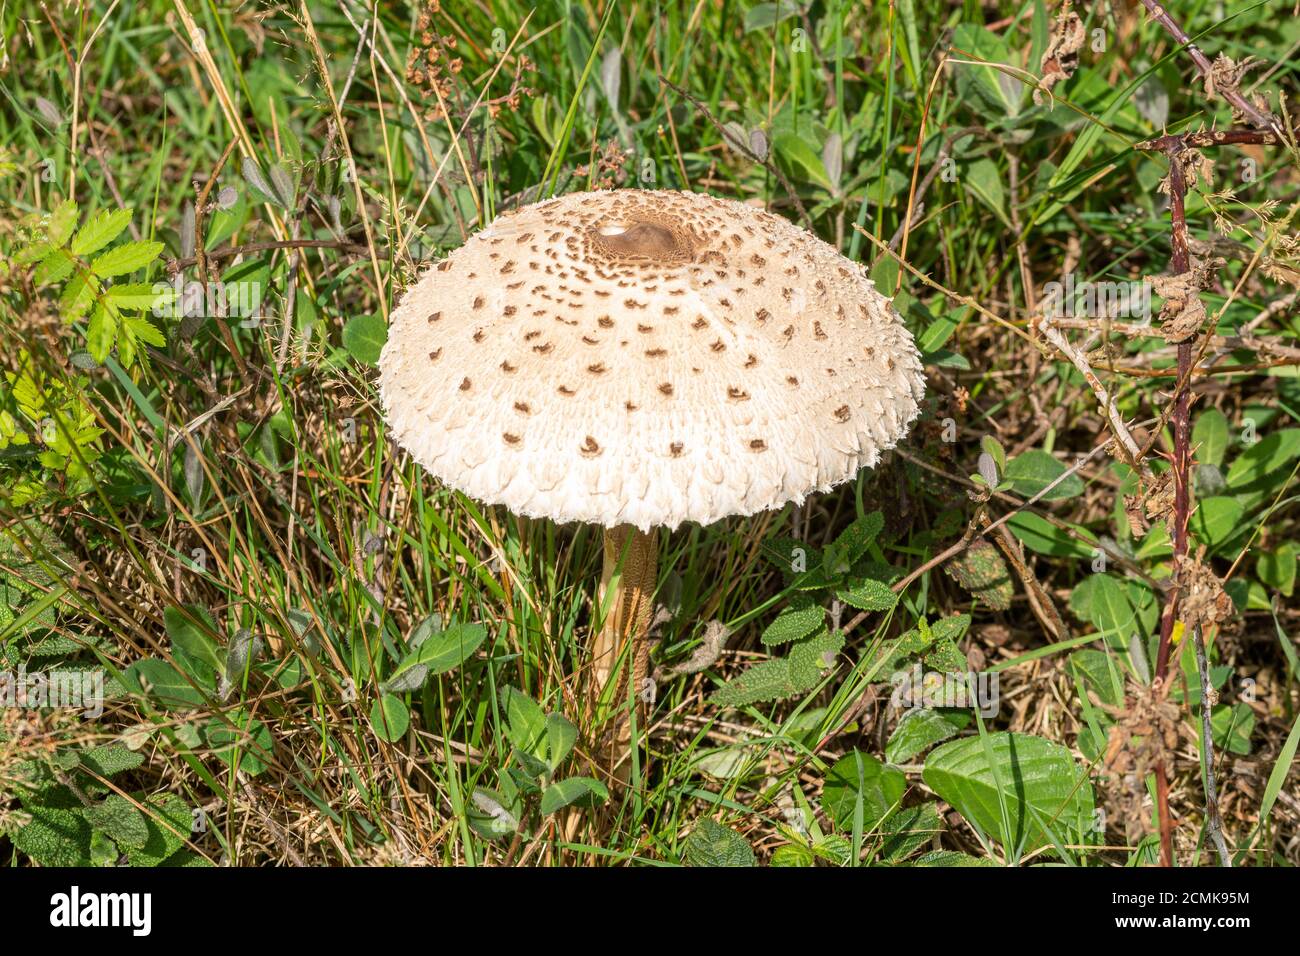 Parasol toadstool or mushroom (Macrolepiota procera) growing during September in grassland, UK Stock Photo